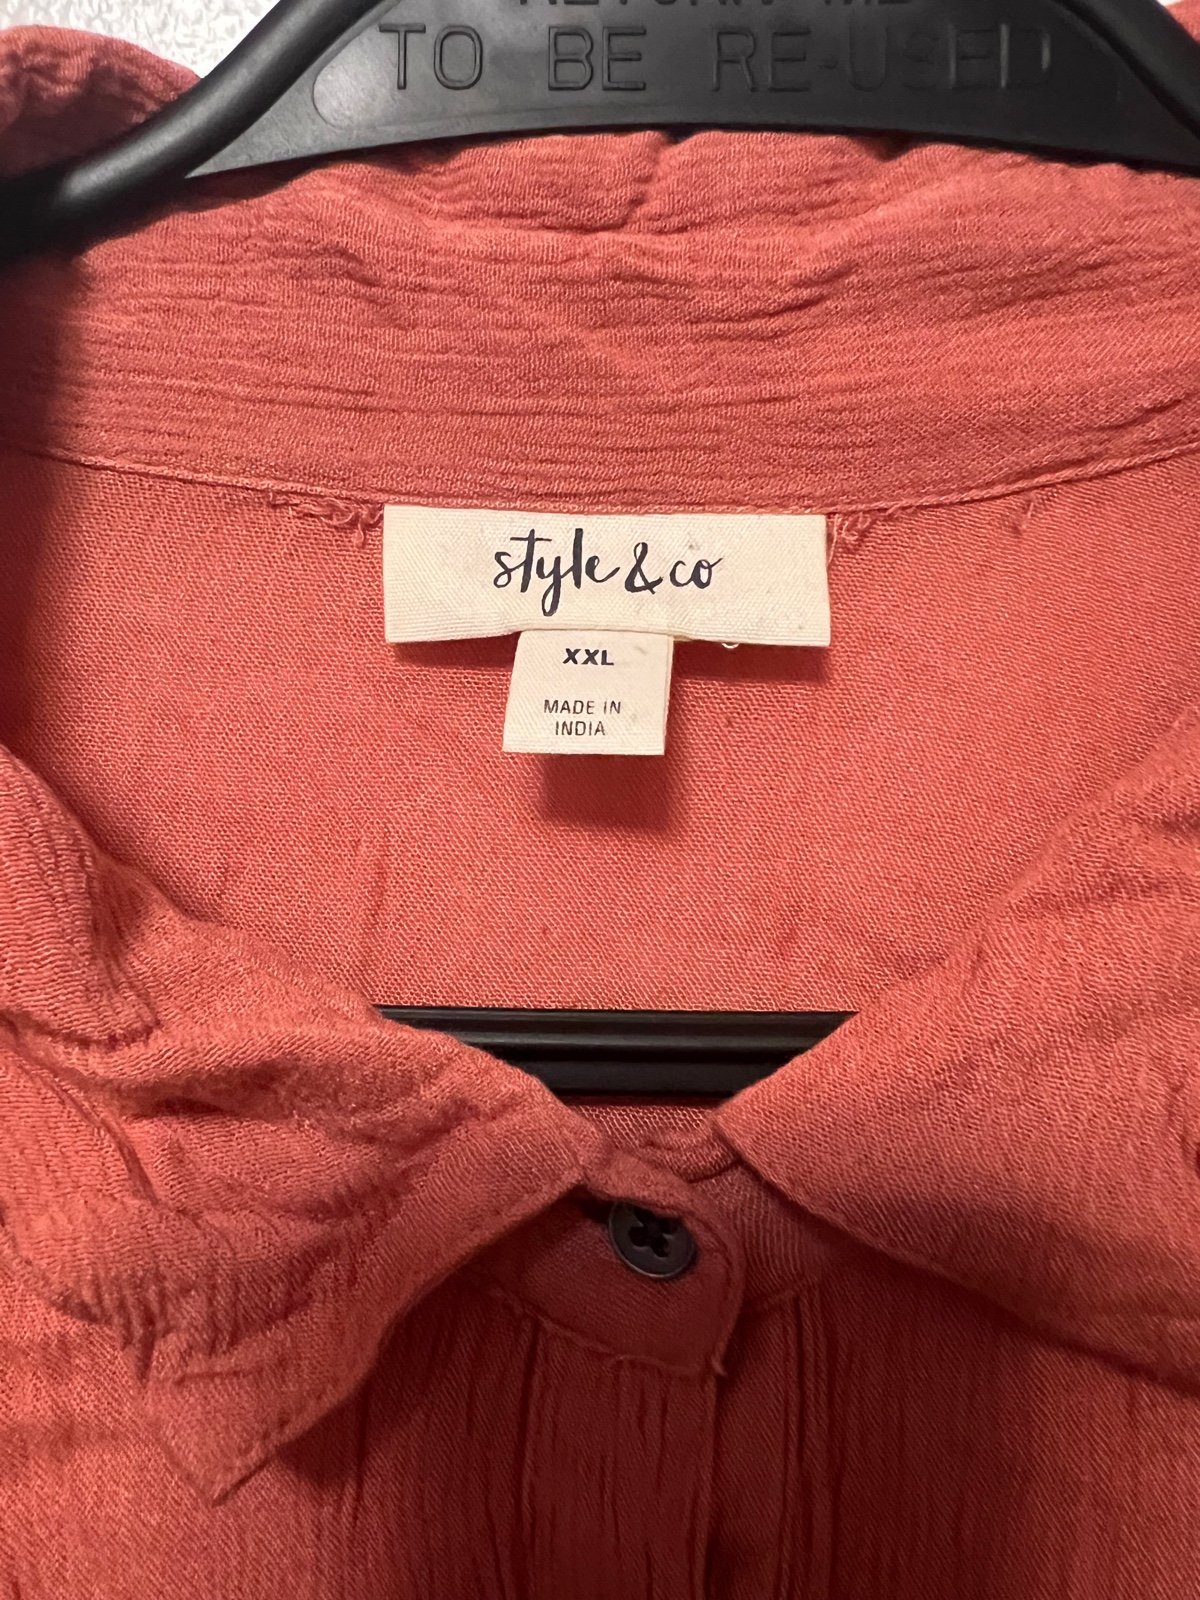 big discount Style & co cotton Women tunic top size XXL GJ2ip8pK6 no tax